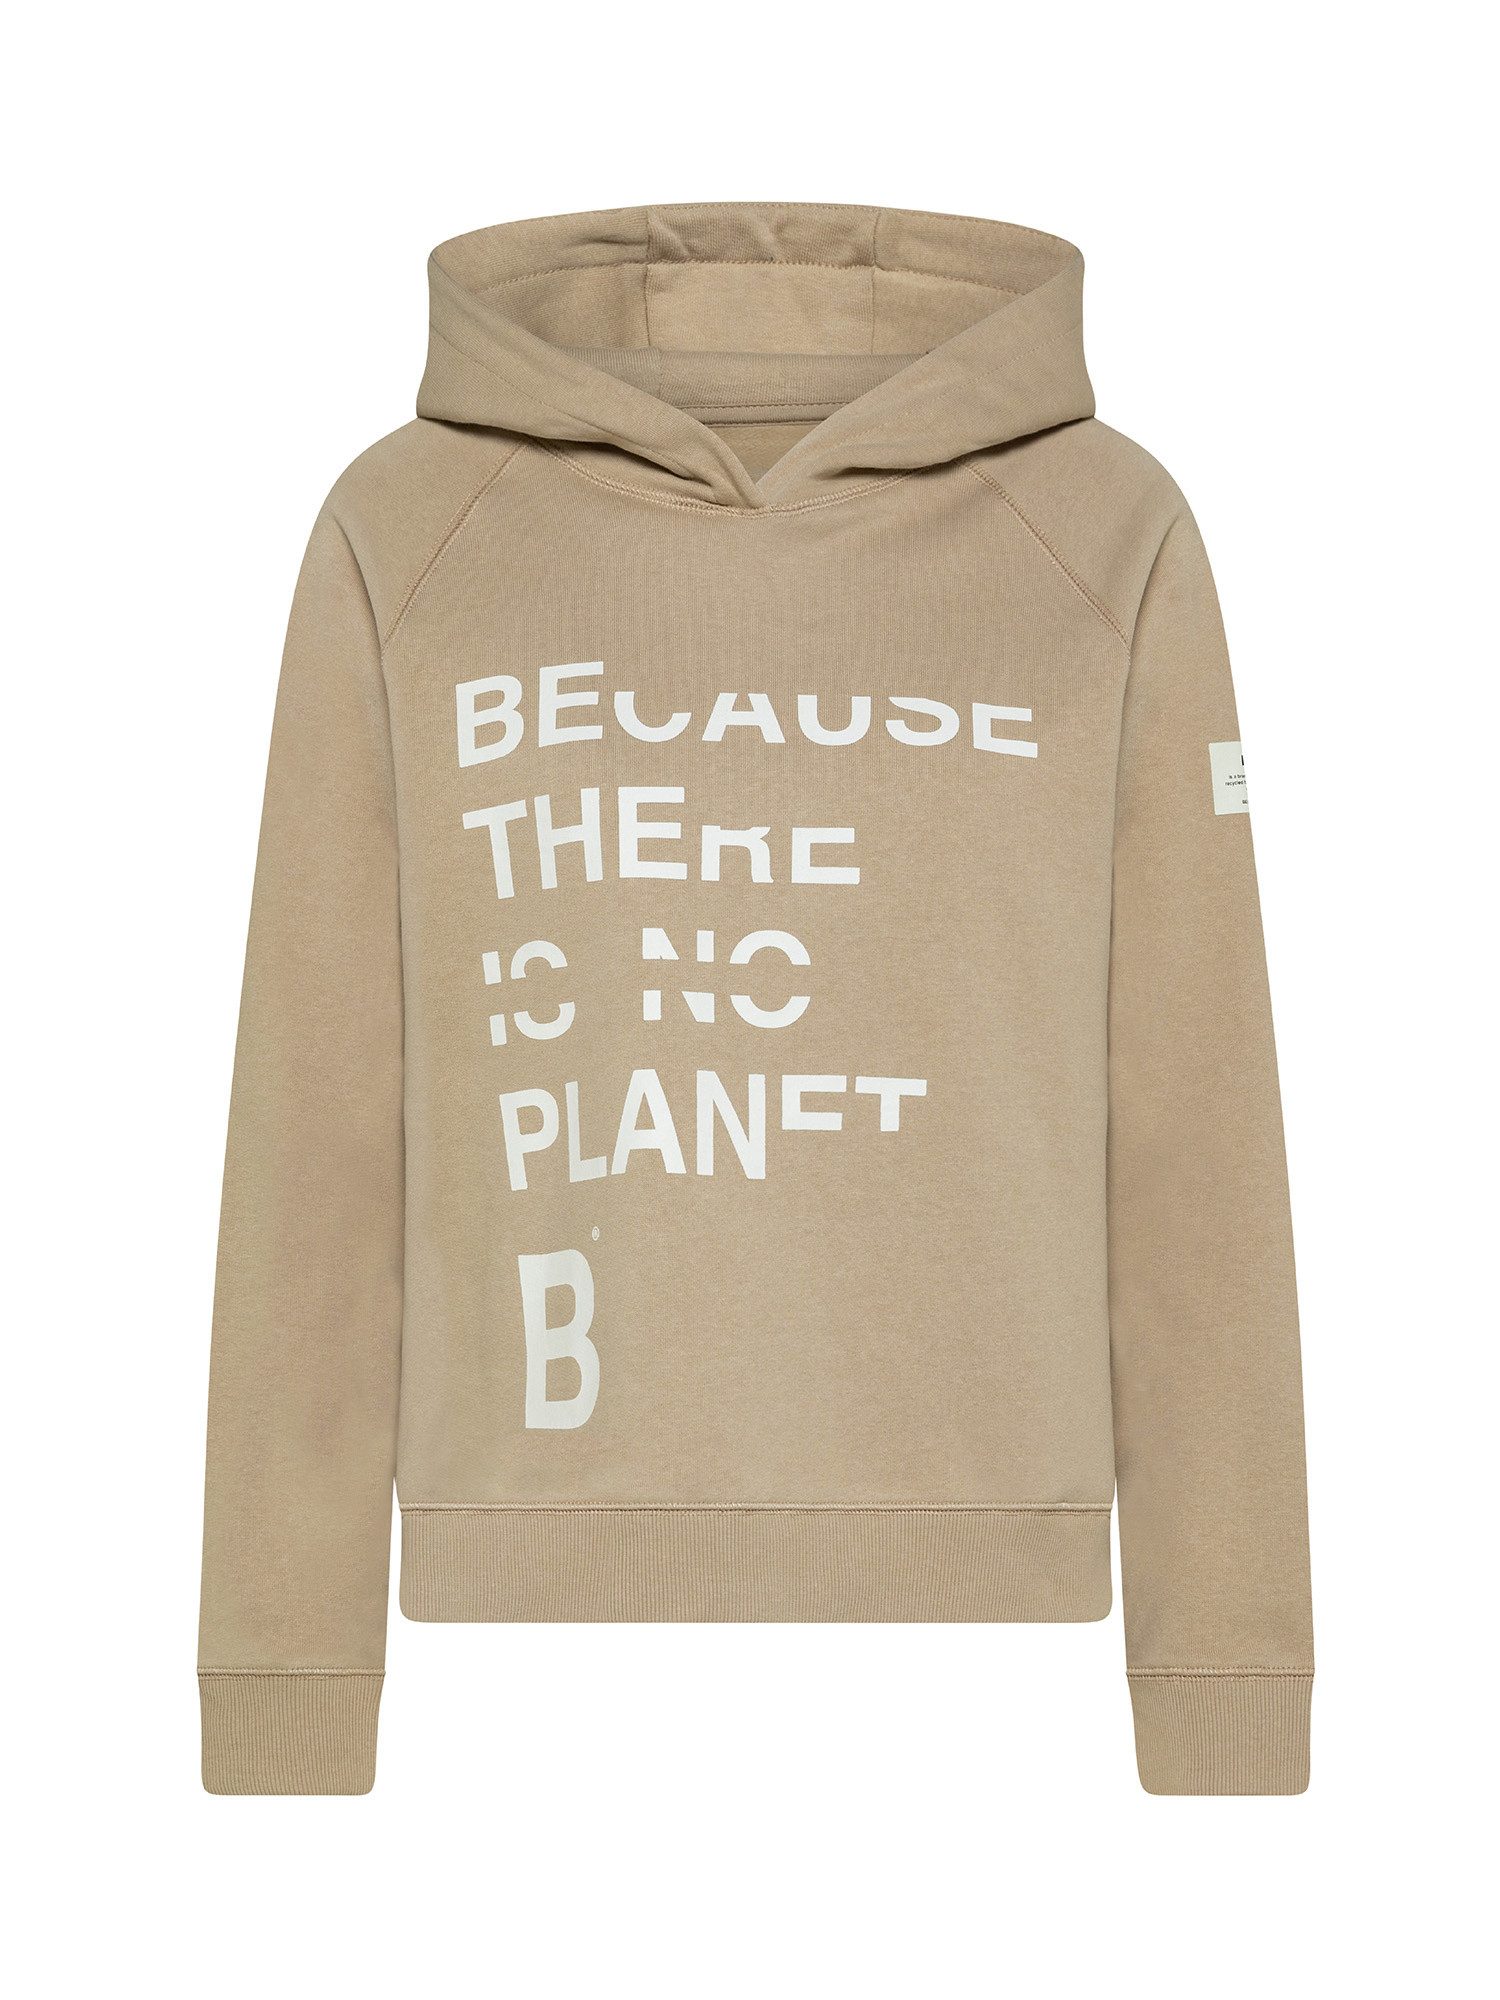 Ecoalf - Plin sweatshirt with print, Beige, large image number 0